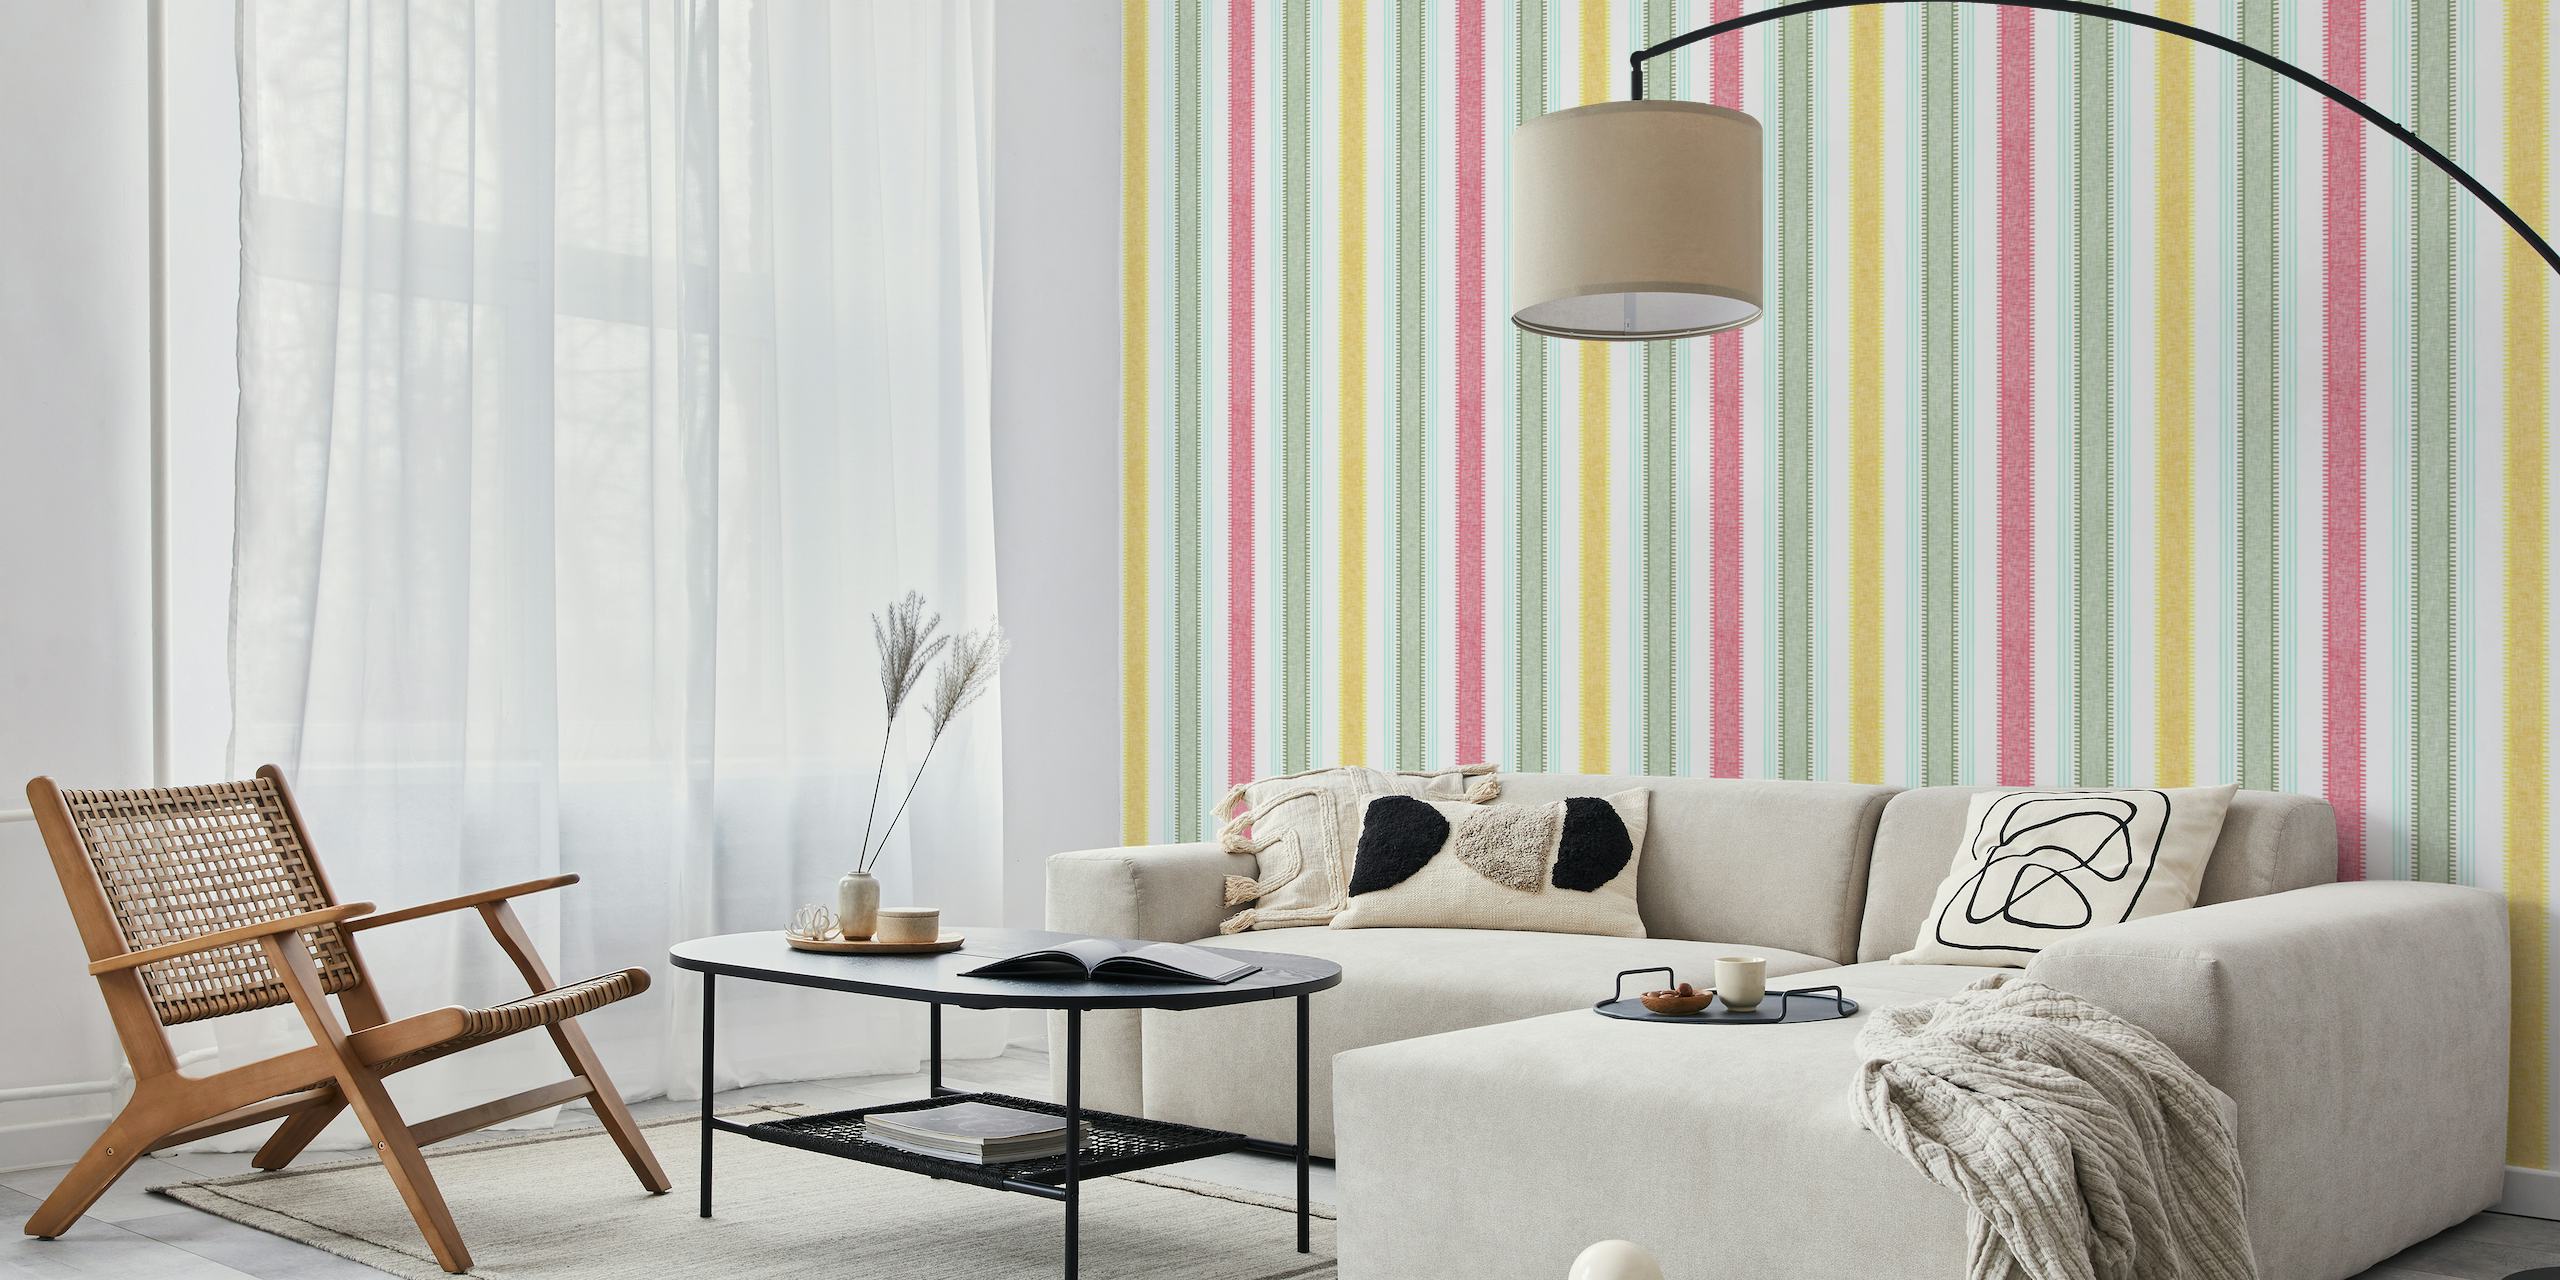 French provencal stripes wallpaper